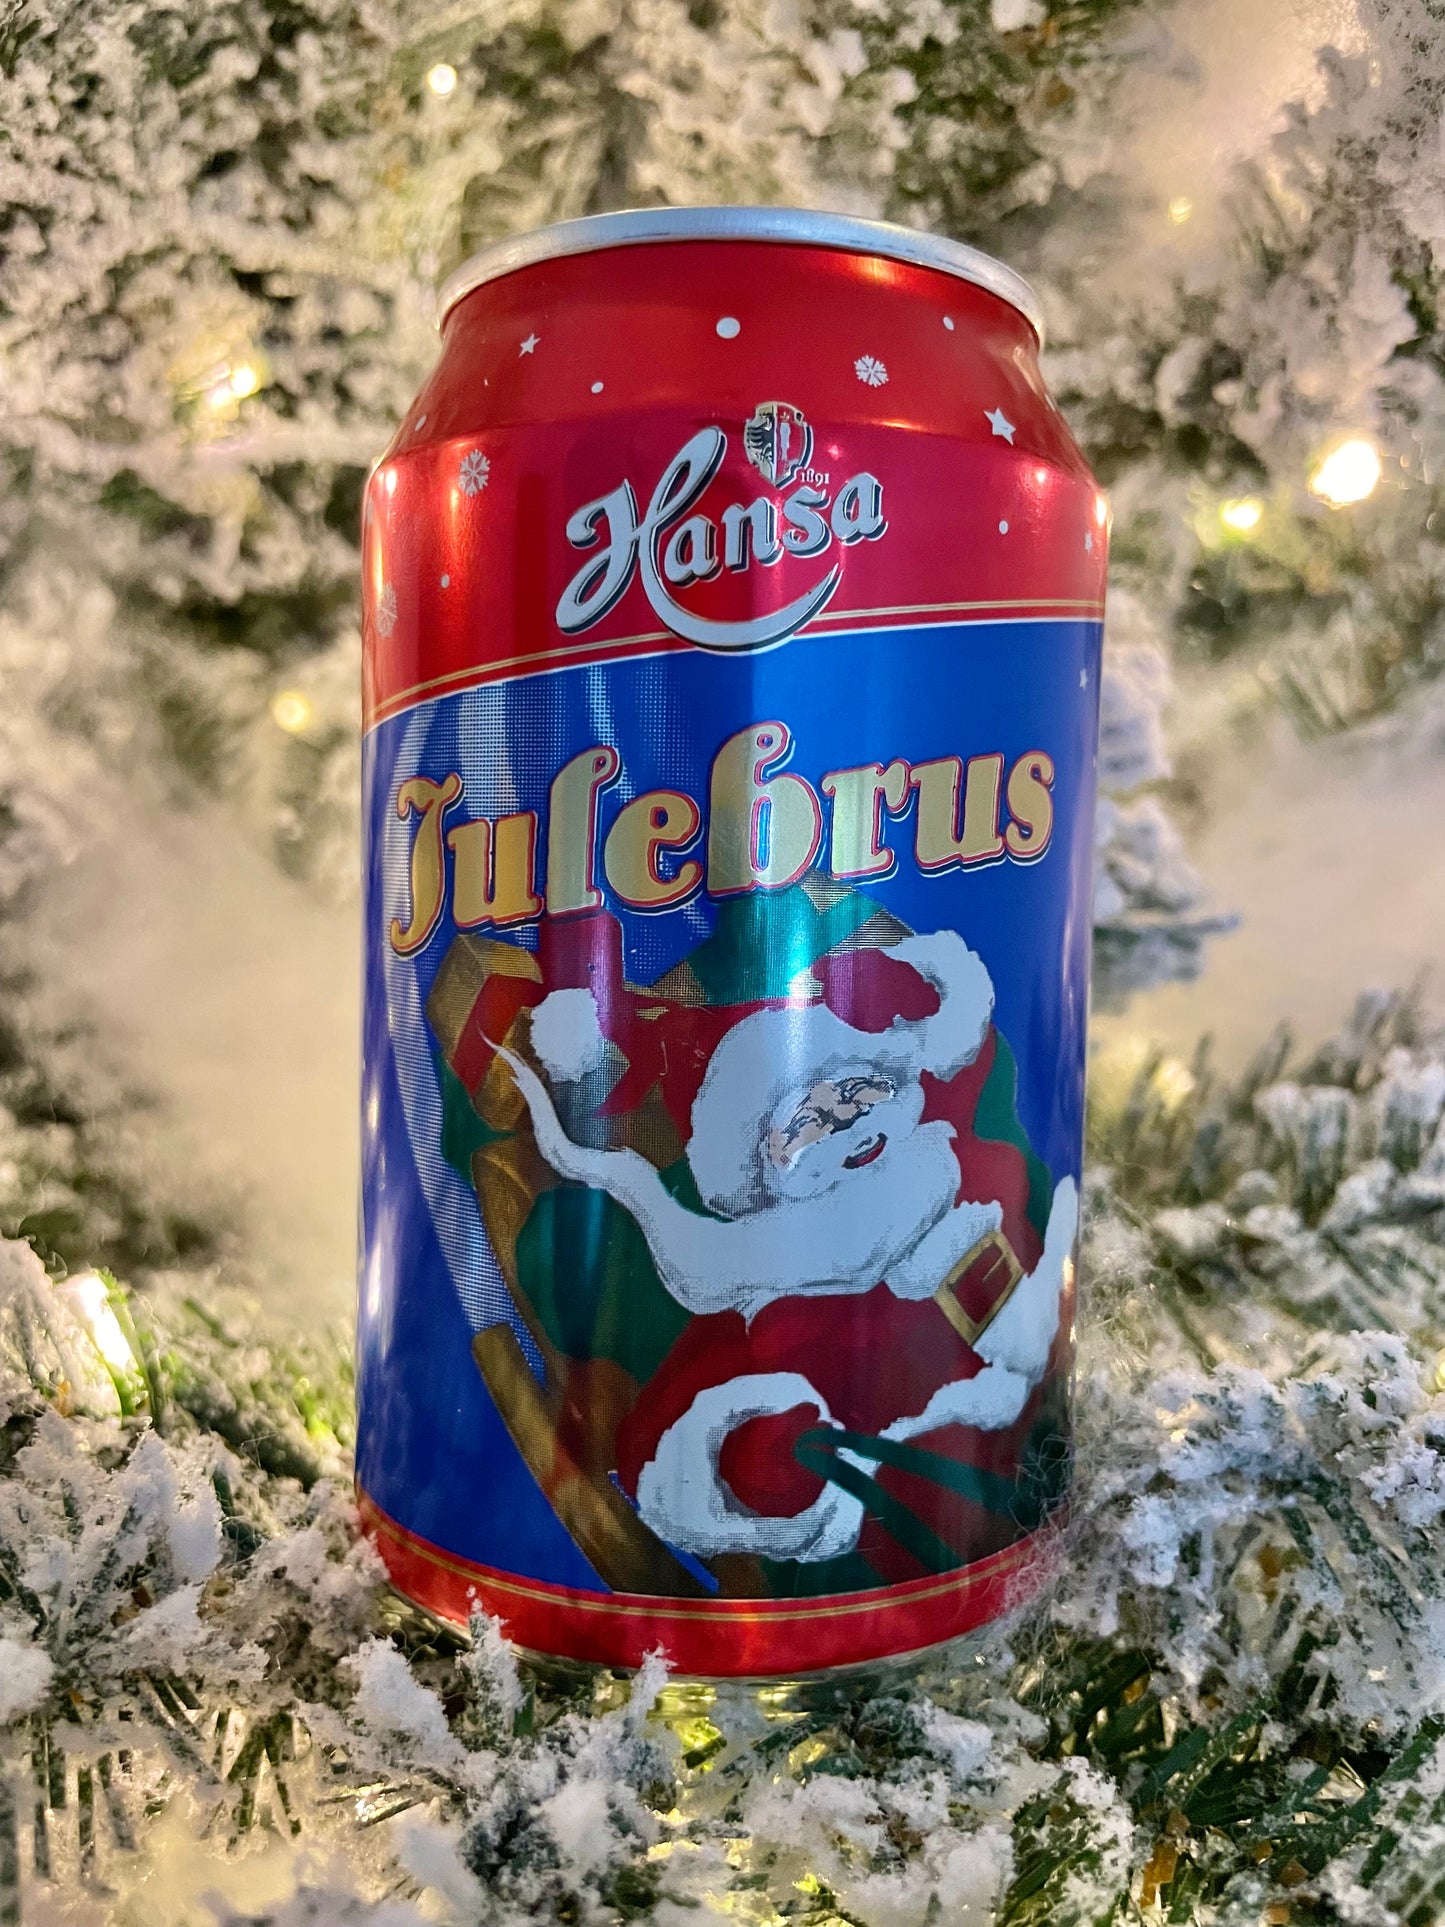 Hansa Julebrus - Hansa Christmas Soda 0.33L (11.1 oz)